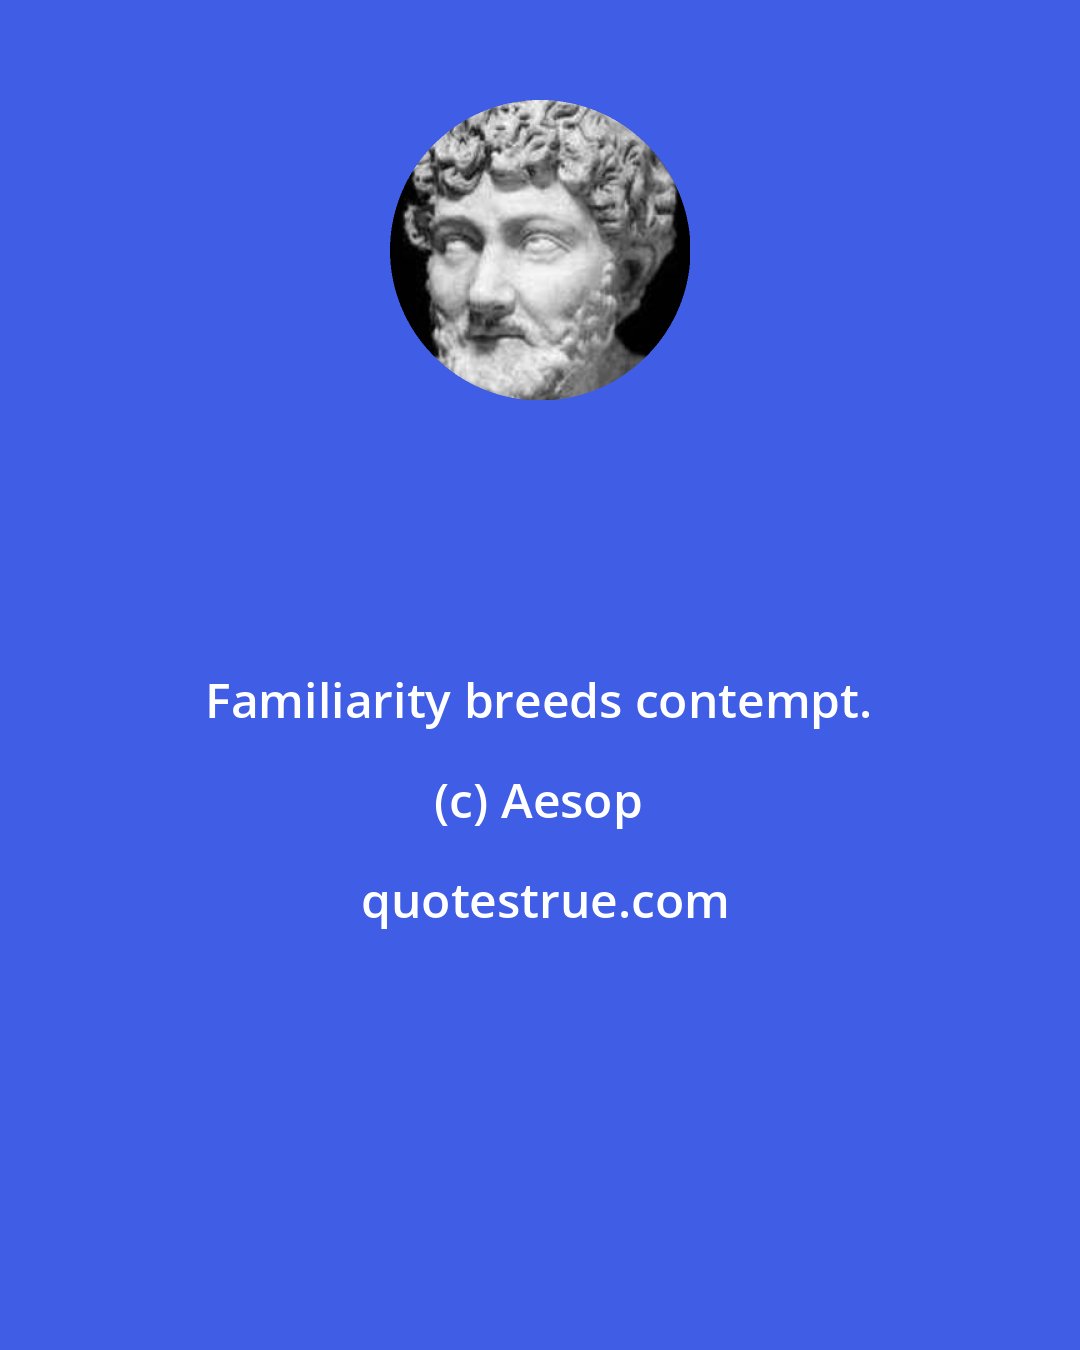 Aesop: Familiarity breeds contempt.